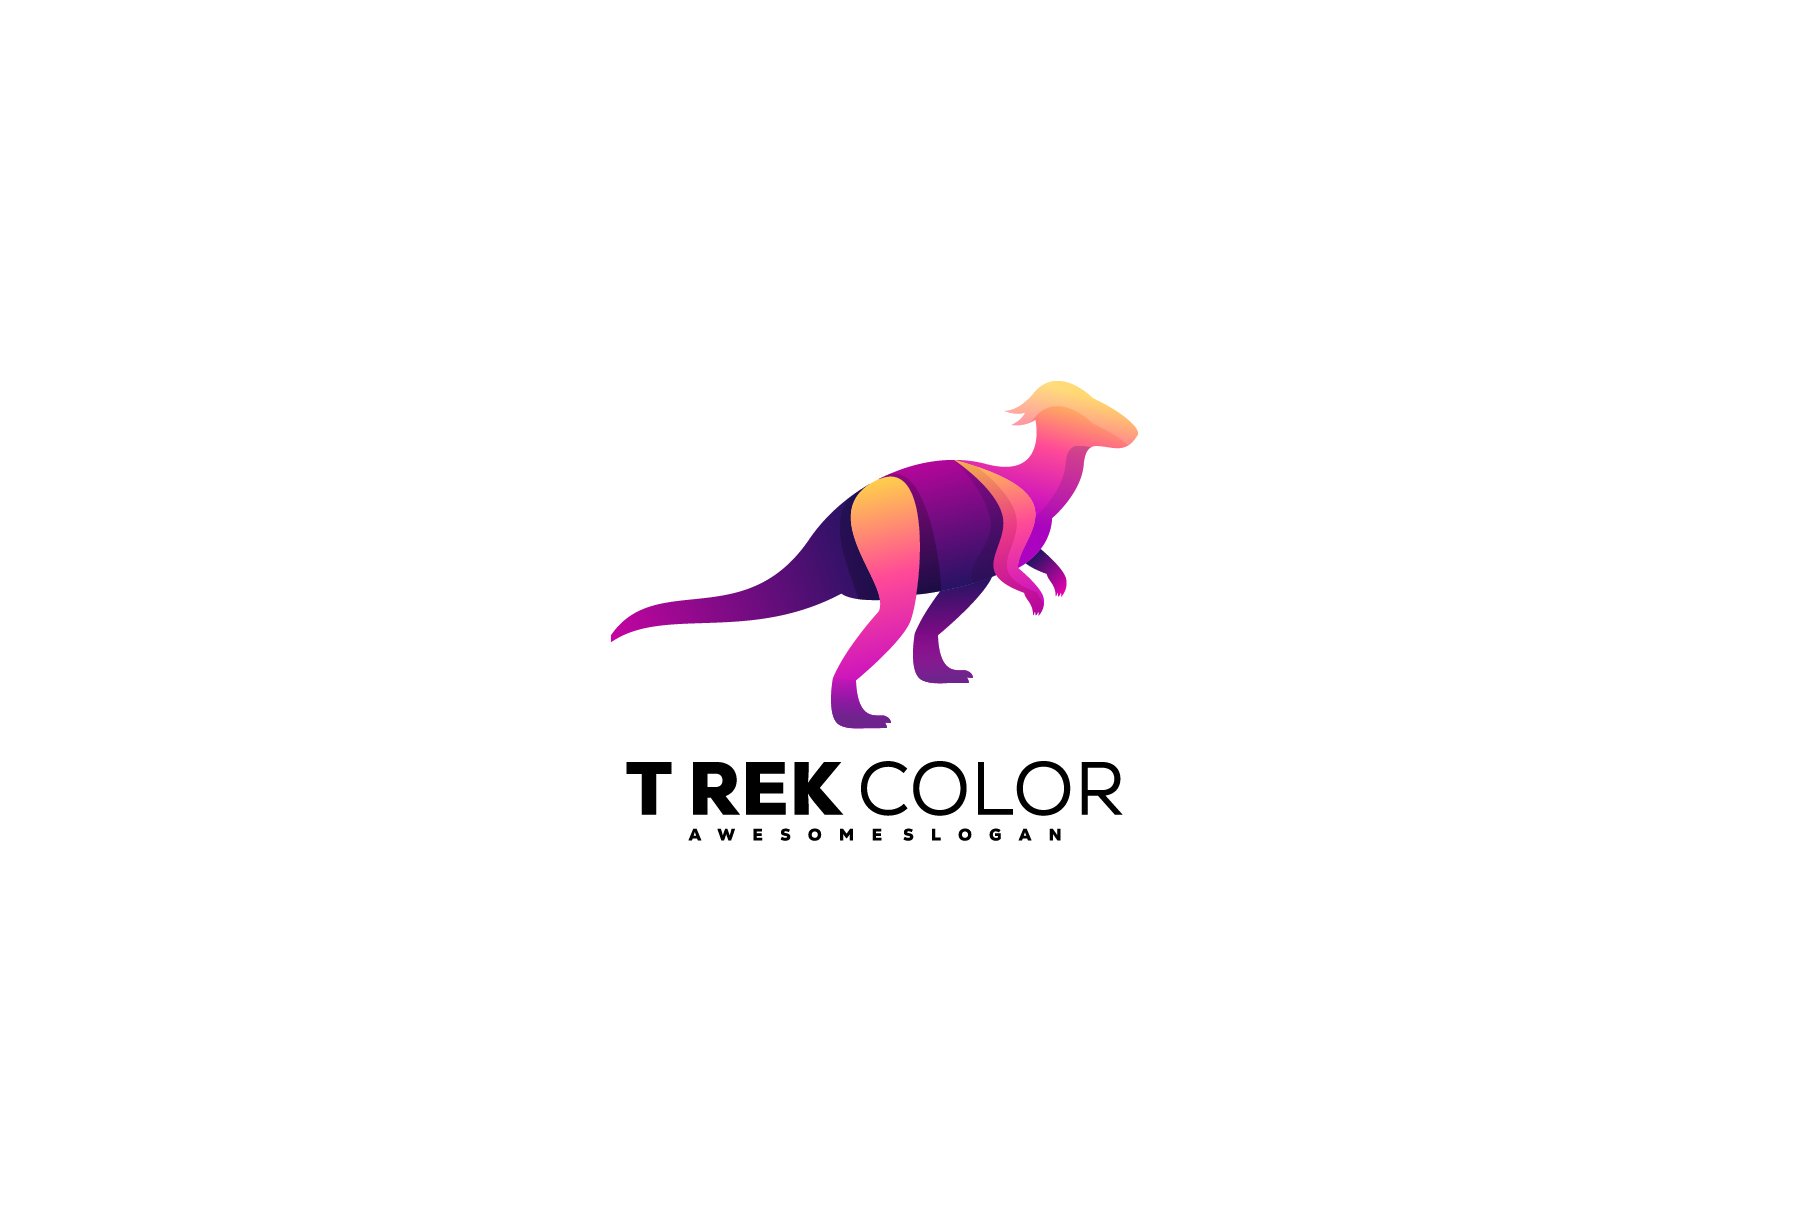 trex logo gradient color illustratio cover image.